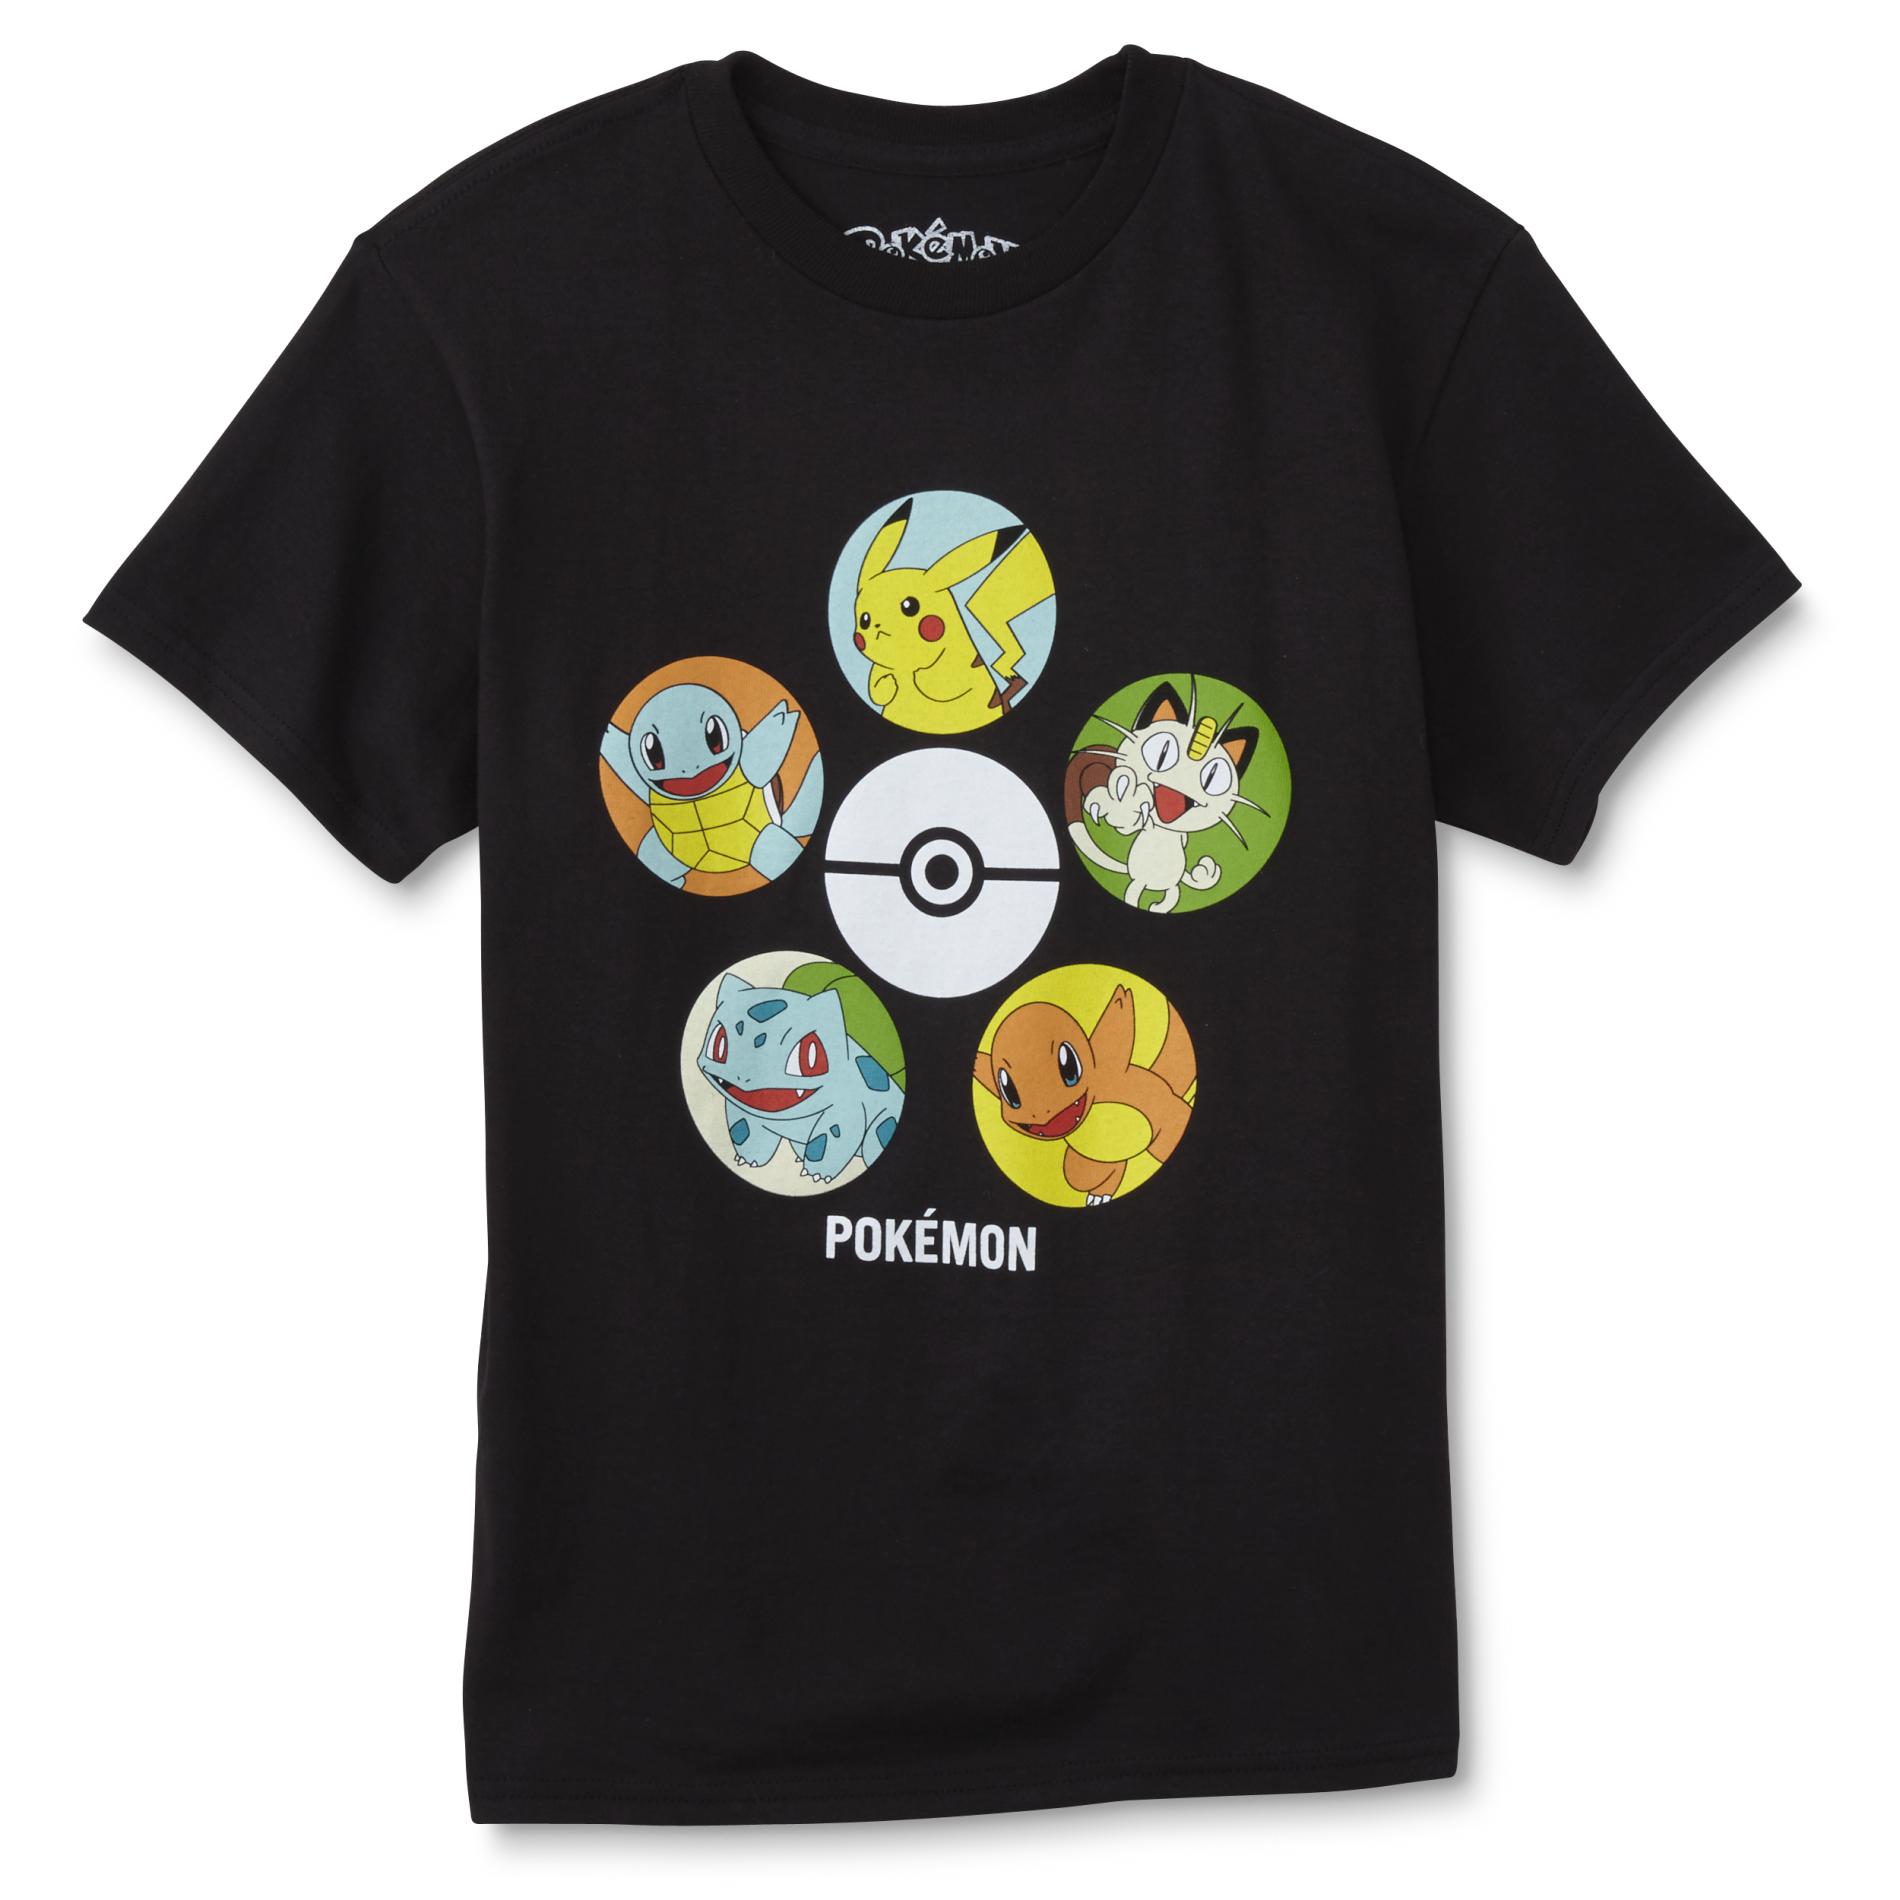 Nintendo Pokemon Boys' Graphic T-Shirt - Poke Ball